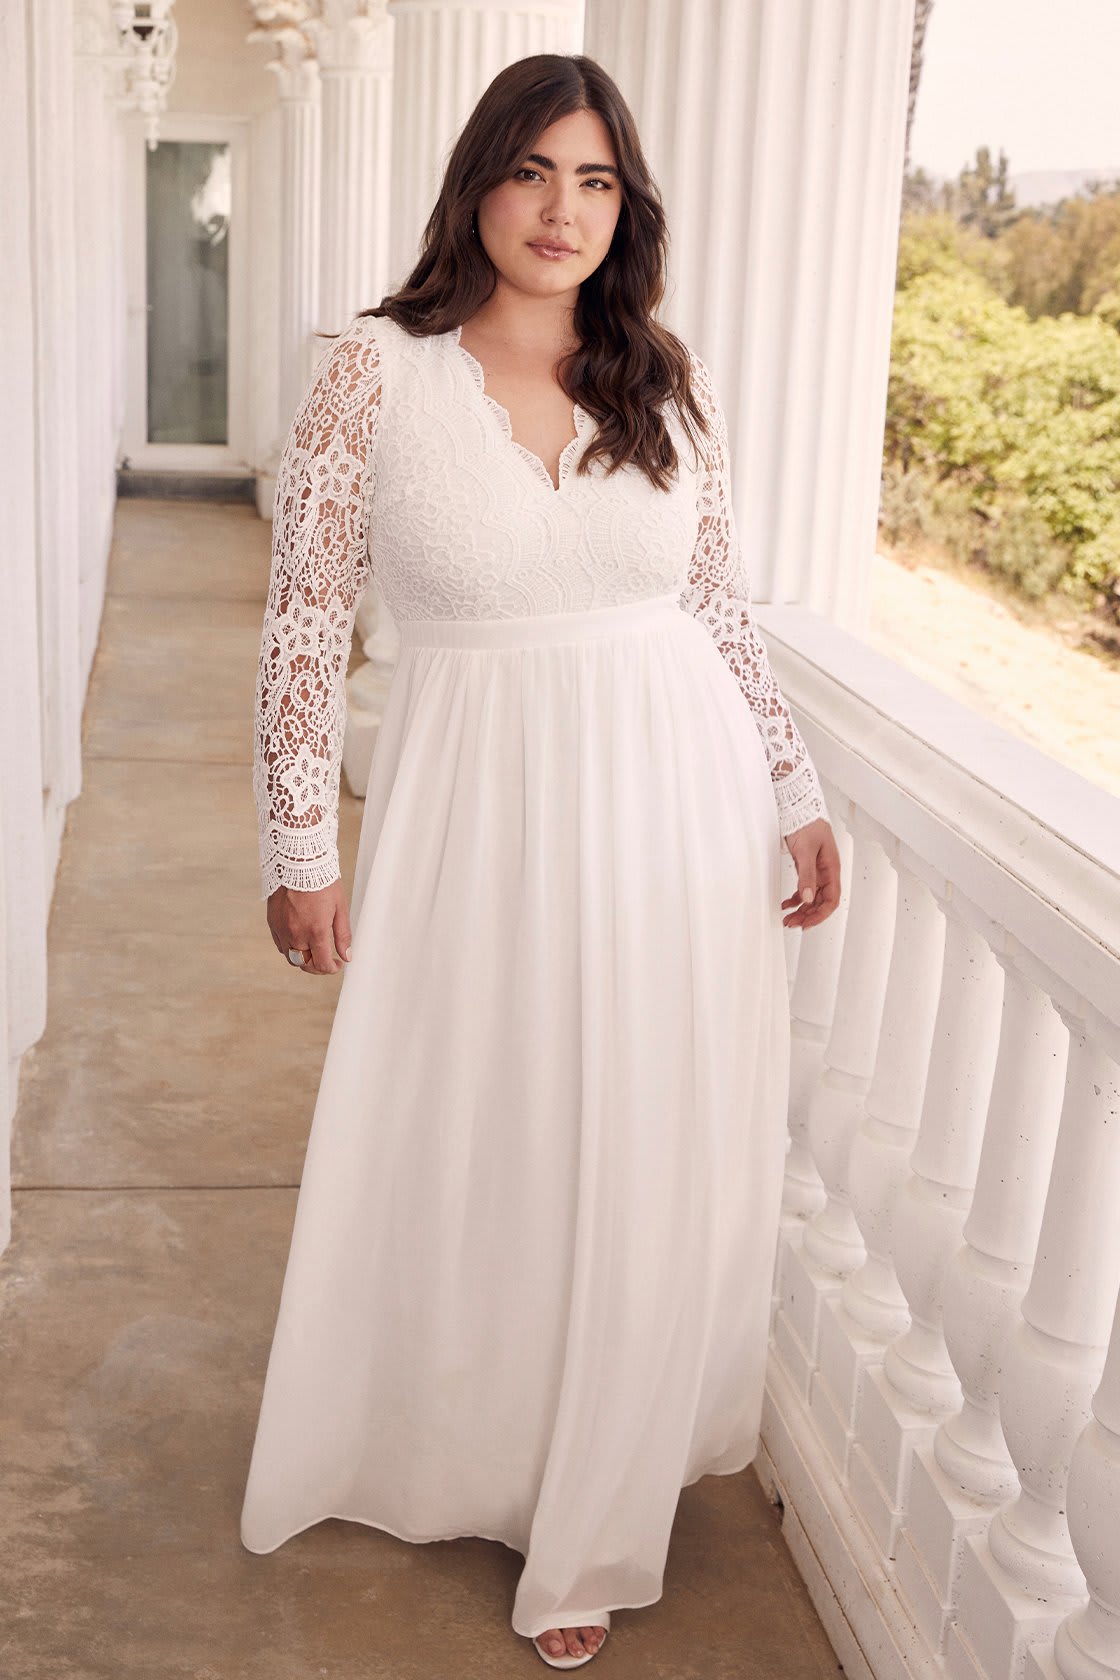 Stunning Long Sleeve Wedding Dresses For Every Type Of Bride - Lulus.com  Fashion Blog